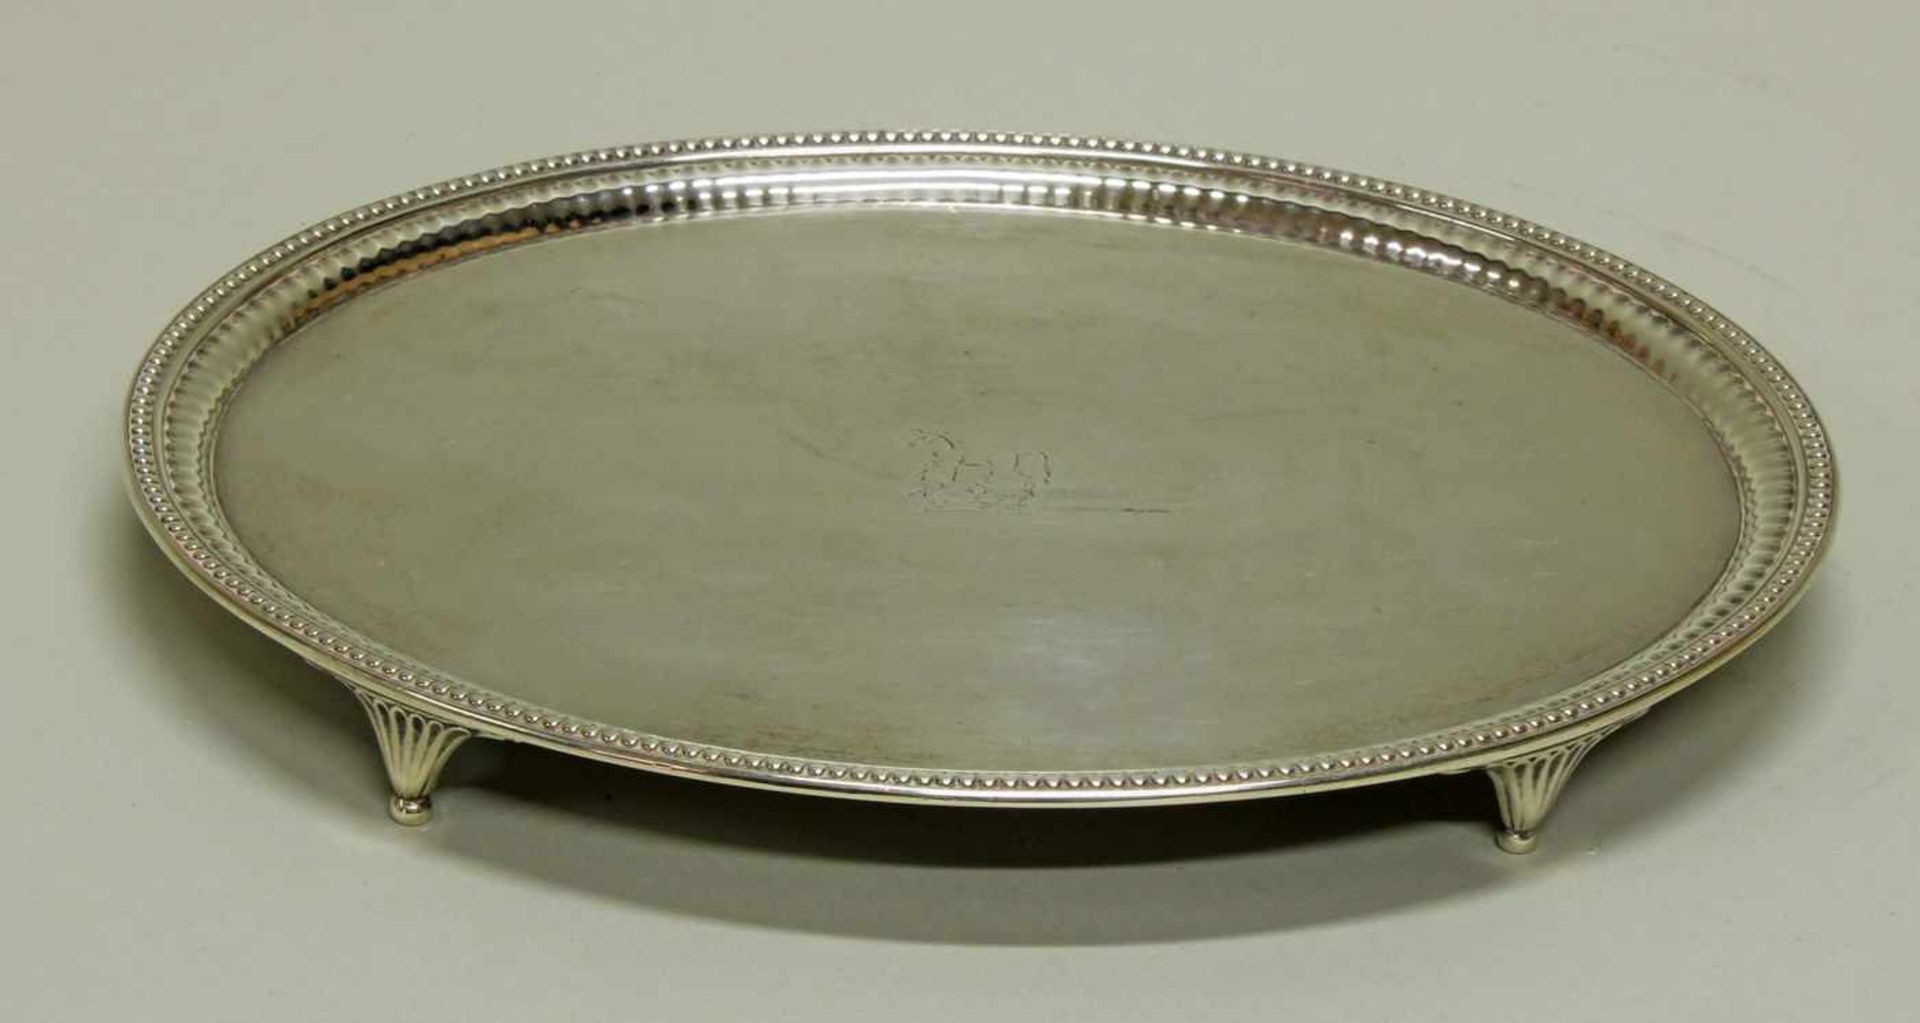 Salver, Silber 925, London, 1783, John Wakelin & William Taylor, oval, glatter Spiegel mit Emblem, - Image 2 of 6